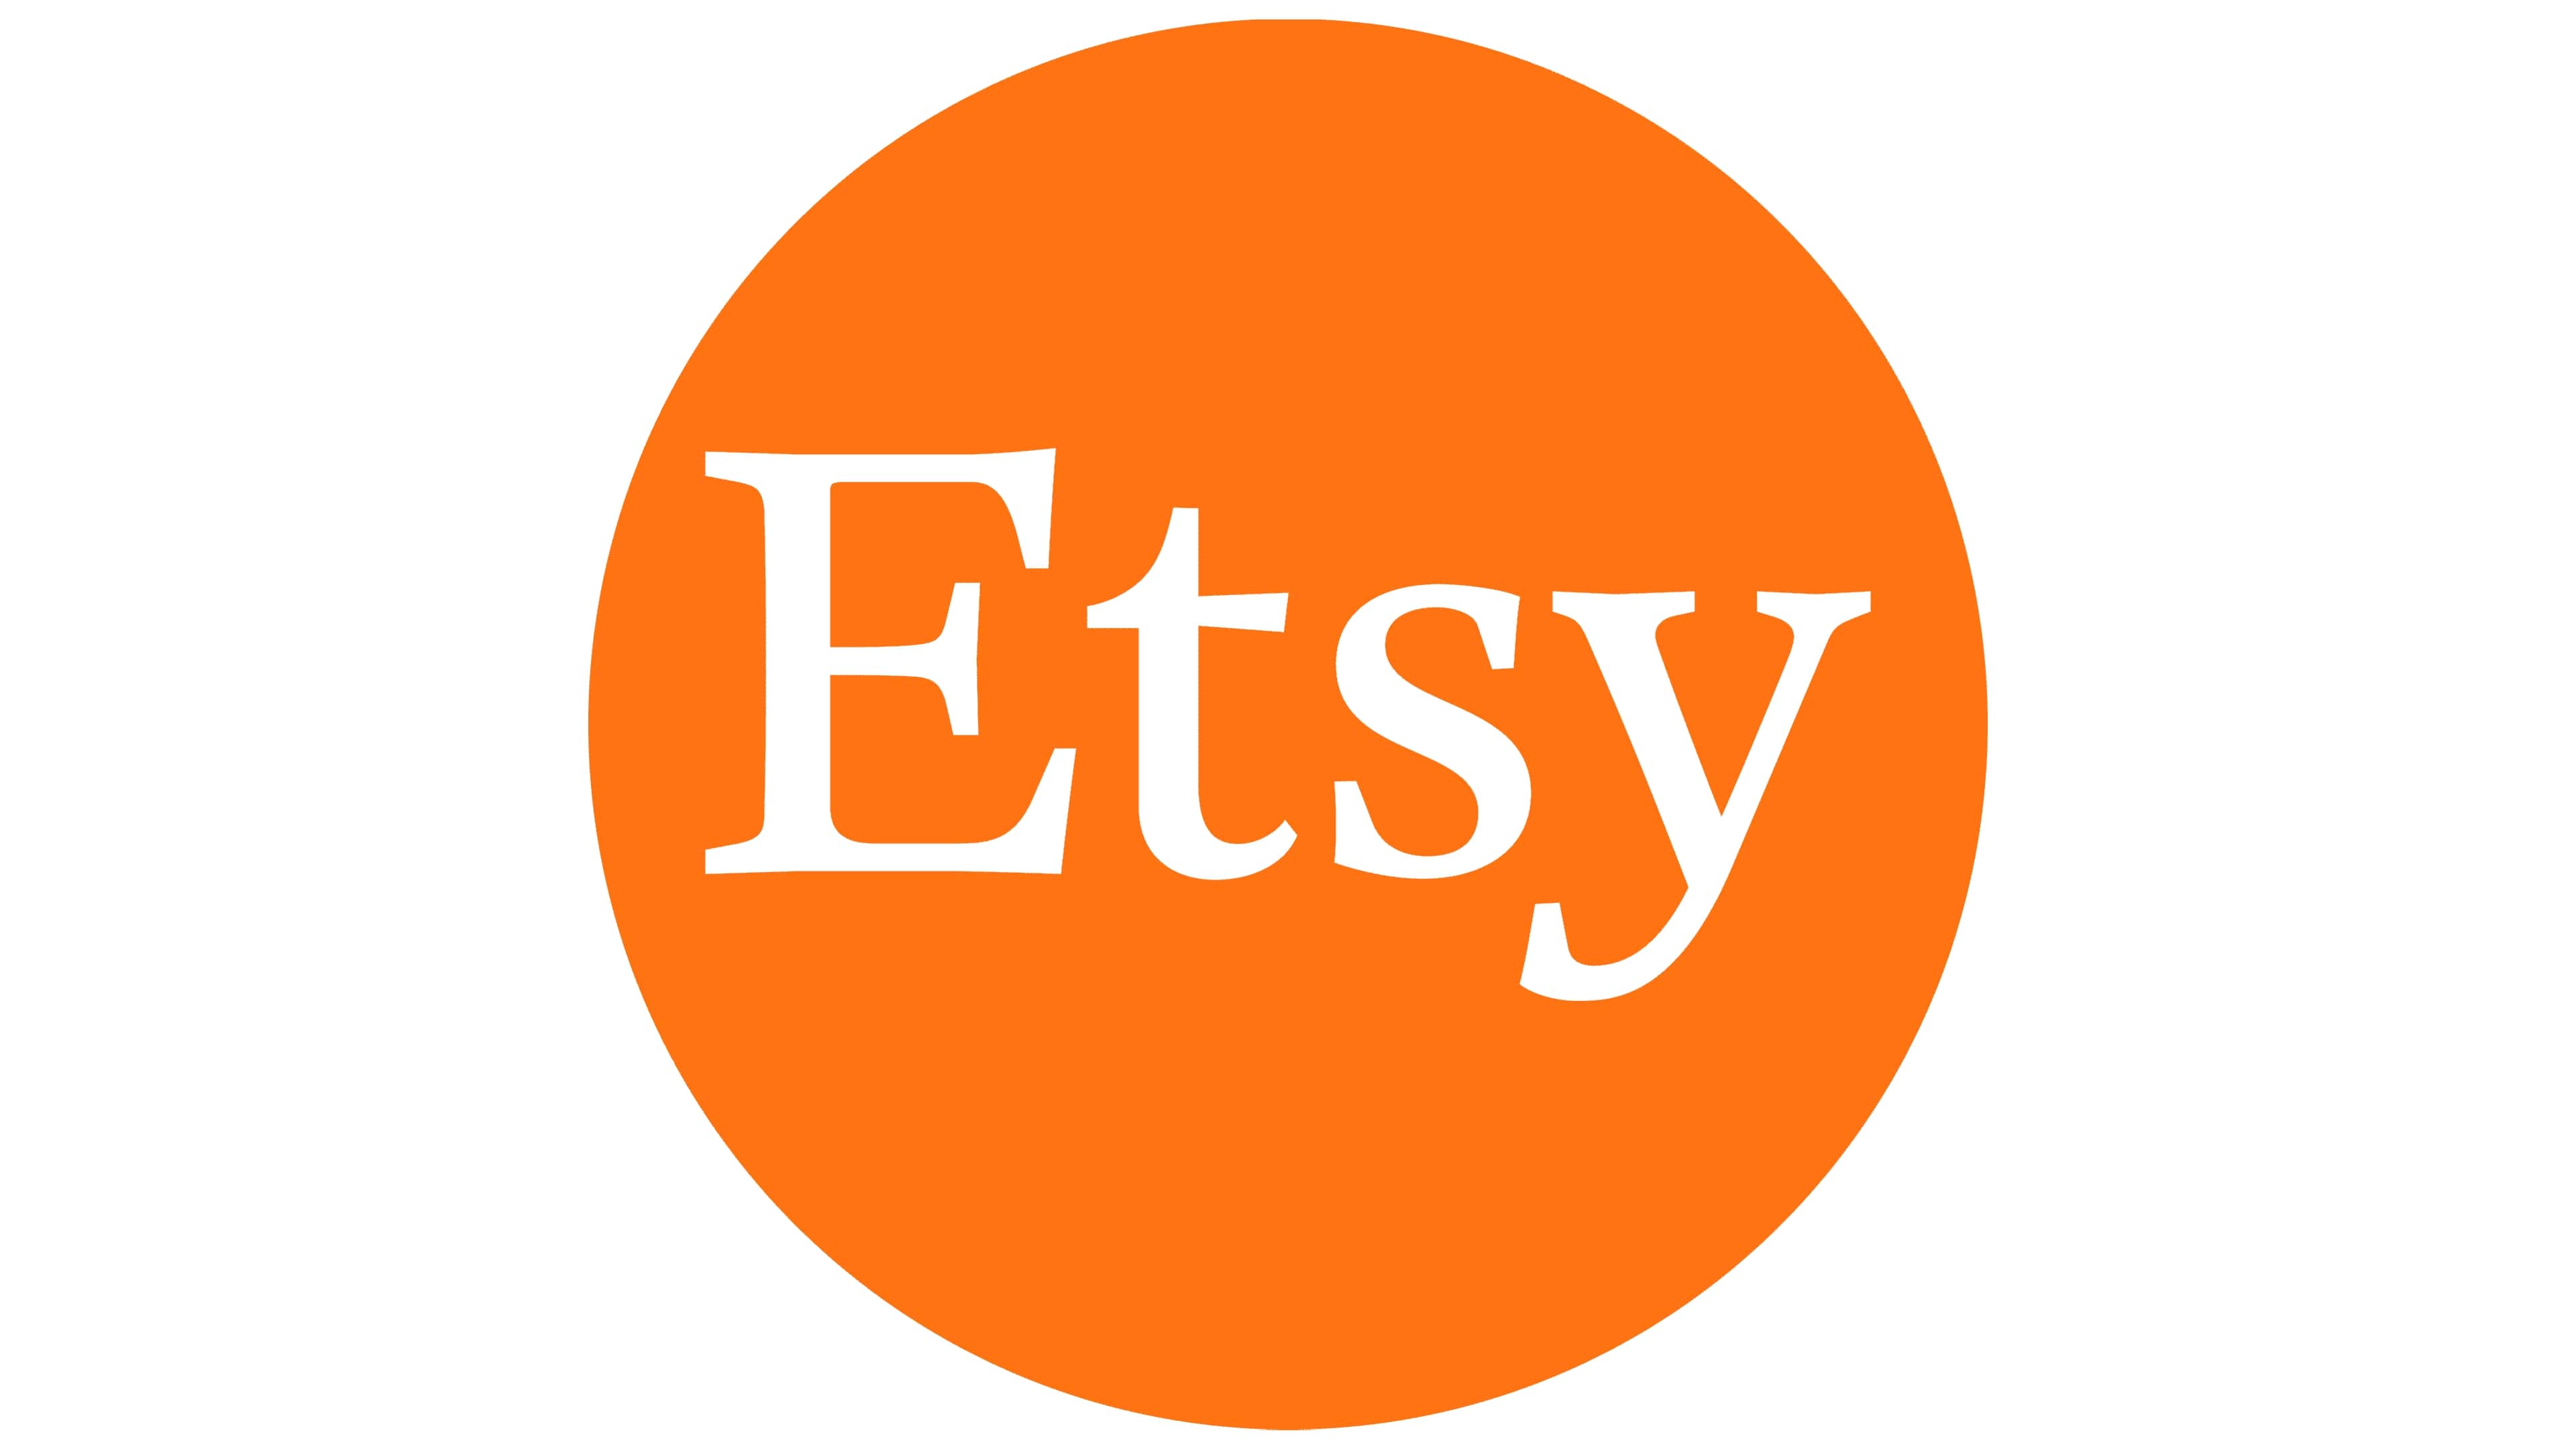 The logo of Etsy. Source: Etsy.com